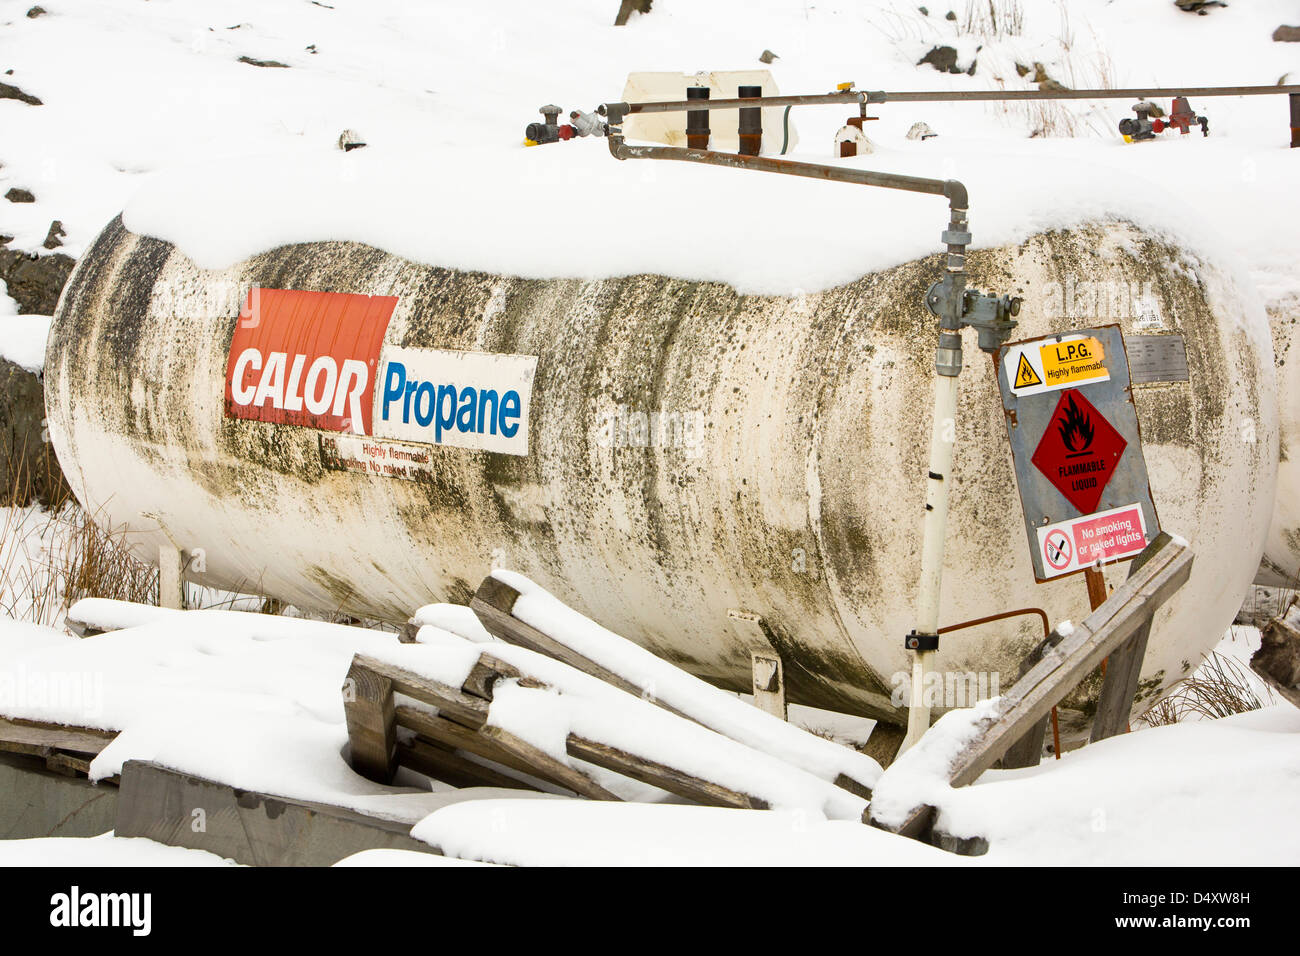 A Calor propane gas tank at the closed Kirkstone slate quarry, Lake District, UK, Stock Photo